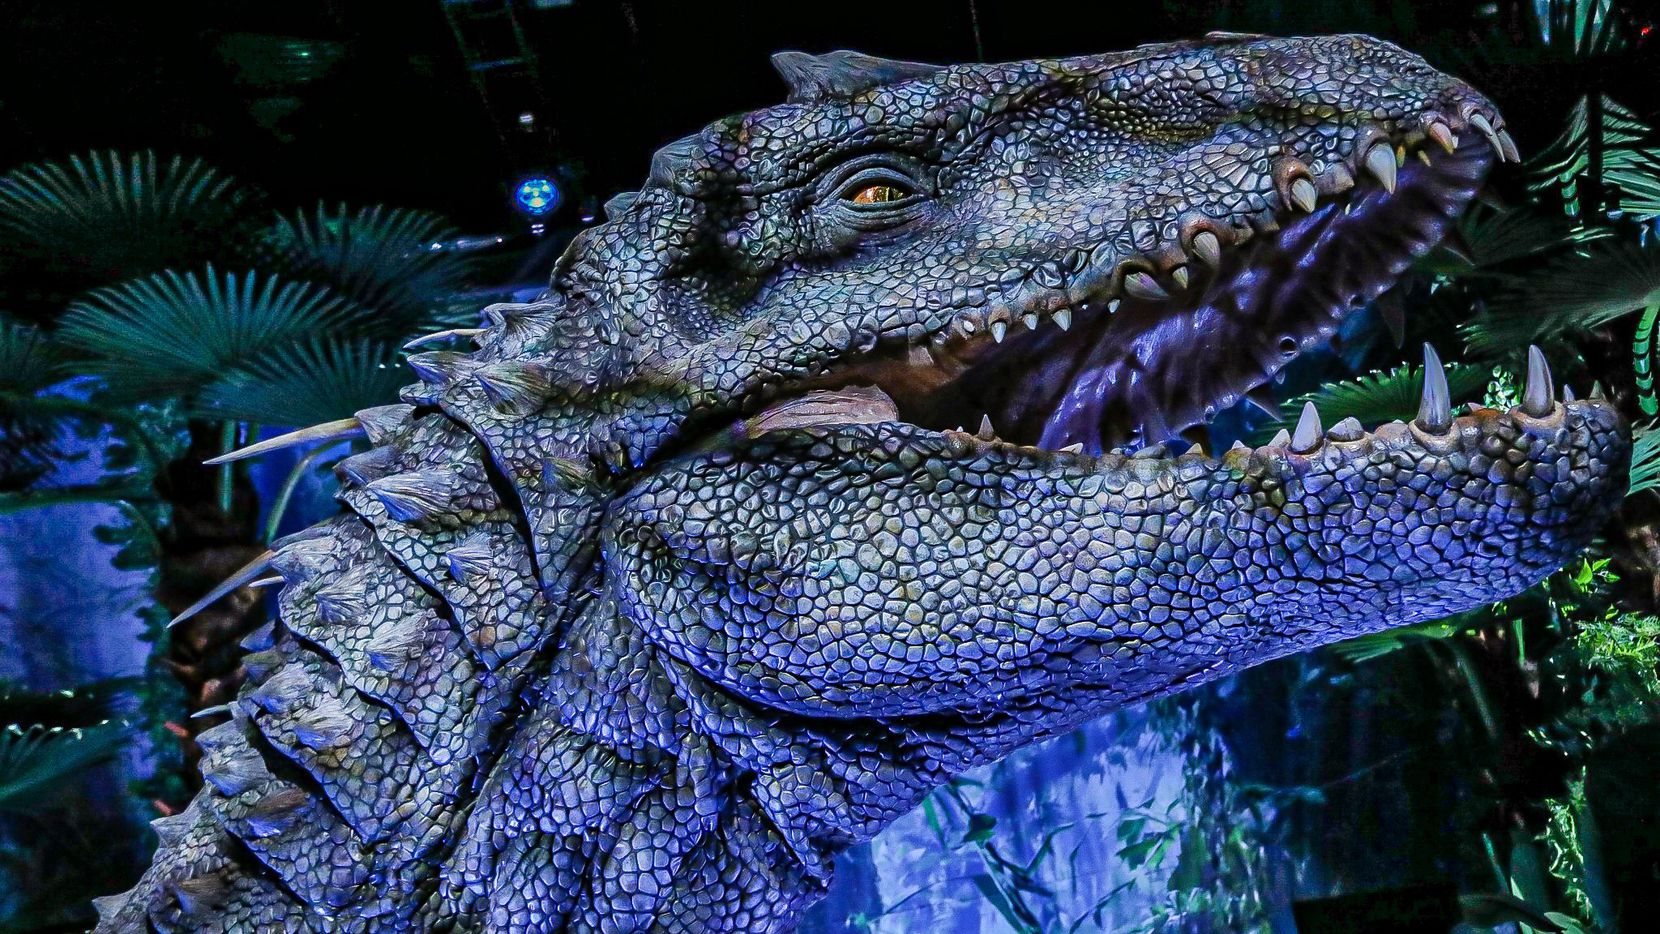 Jurassic World: The Exhibition' Roars Into North Texas